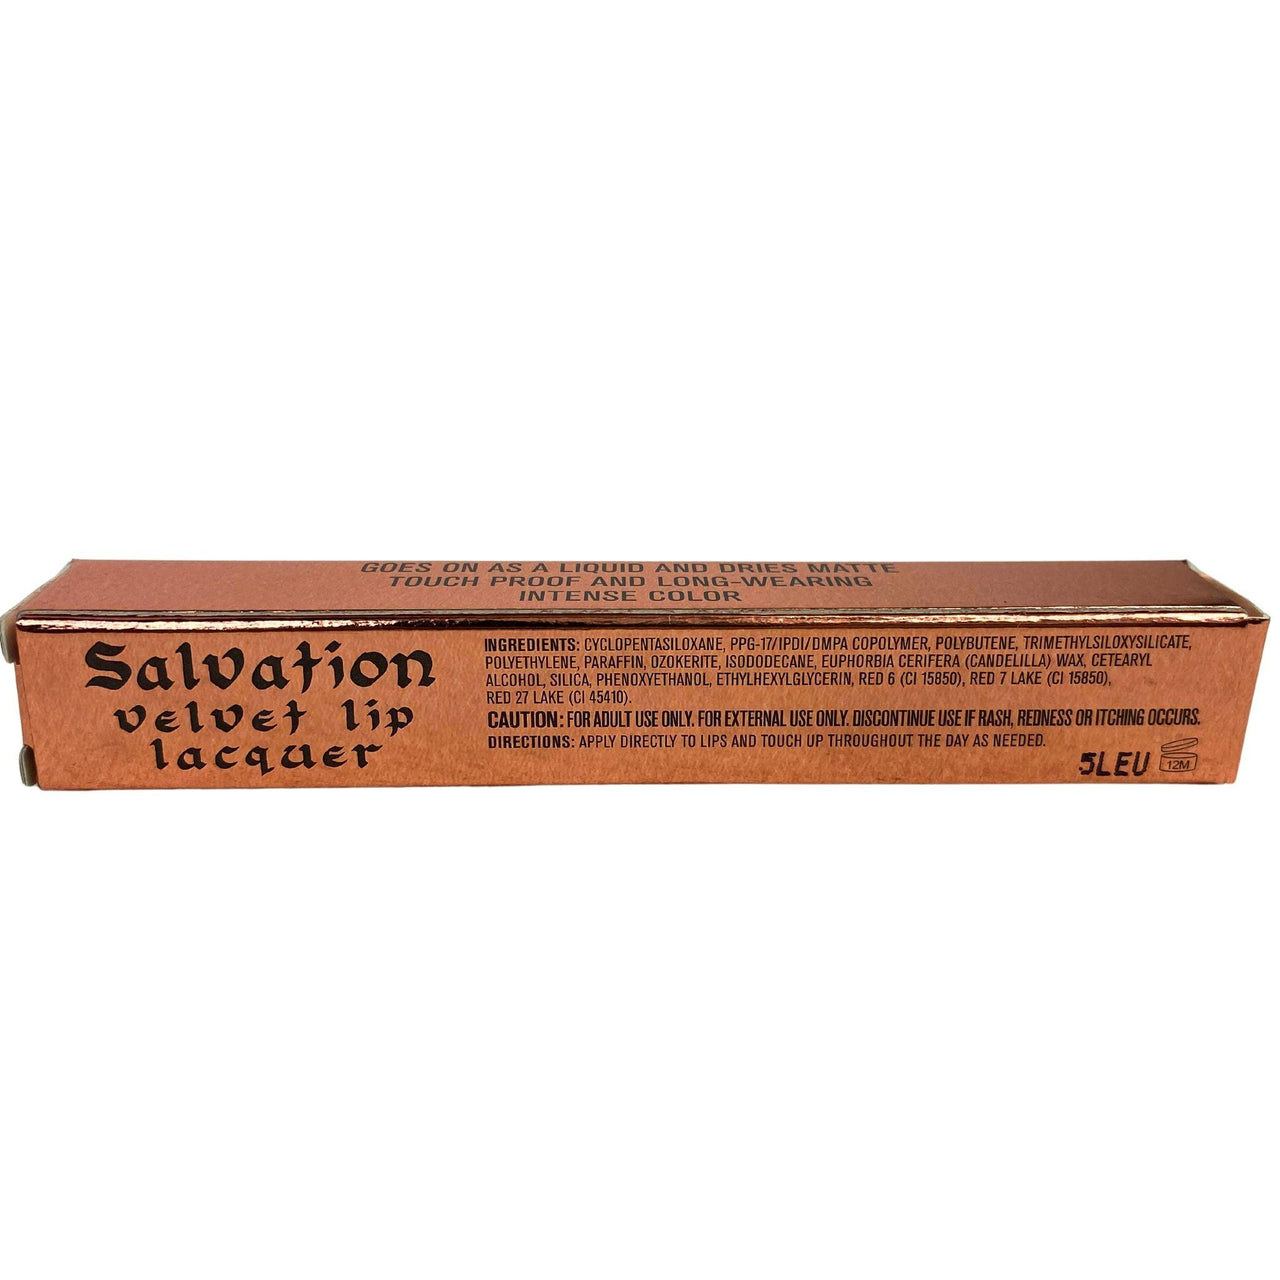 Revolution Salvation Velvet Lip Laquer Attract 0.06oz (72 Pcs Lot) - Discount Wholesalers Inc